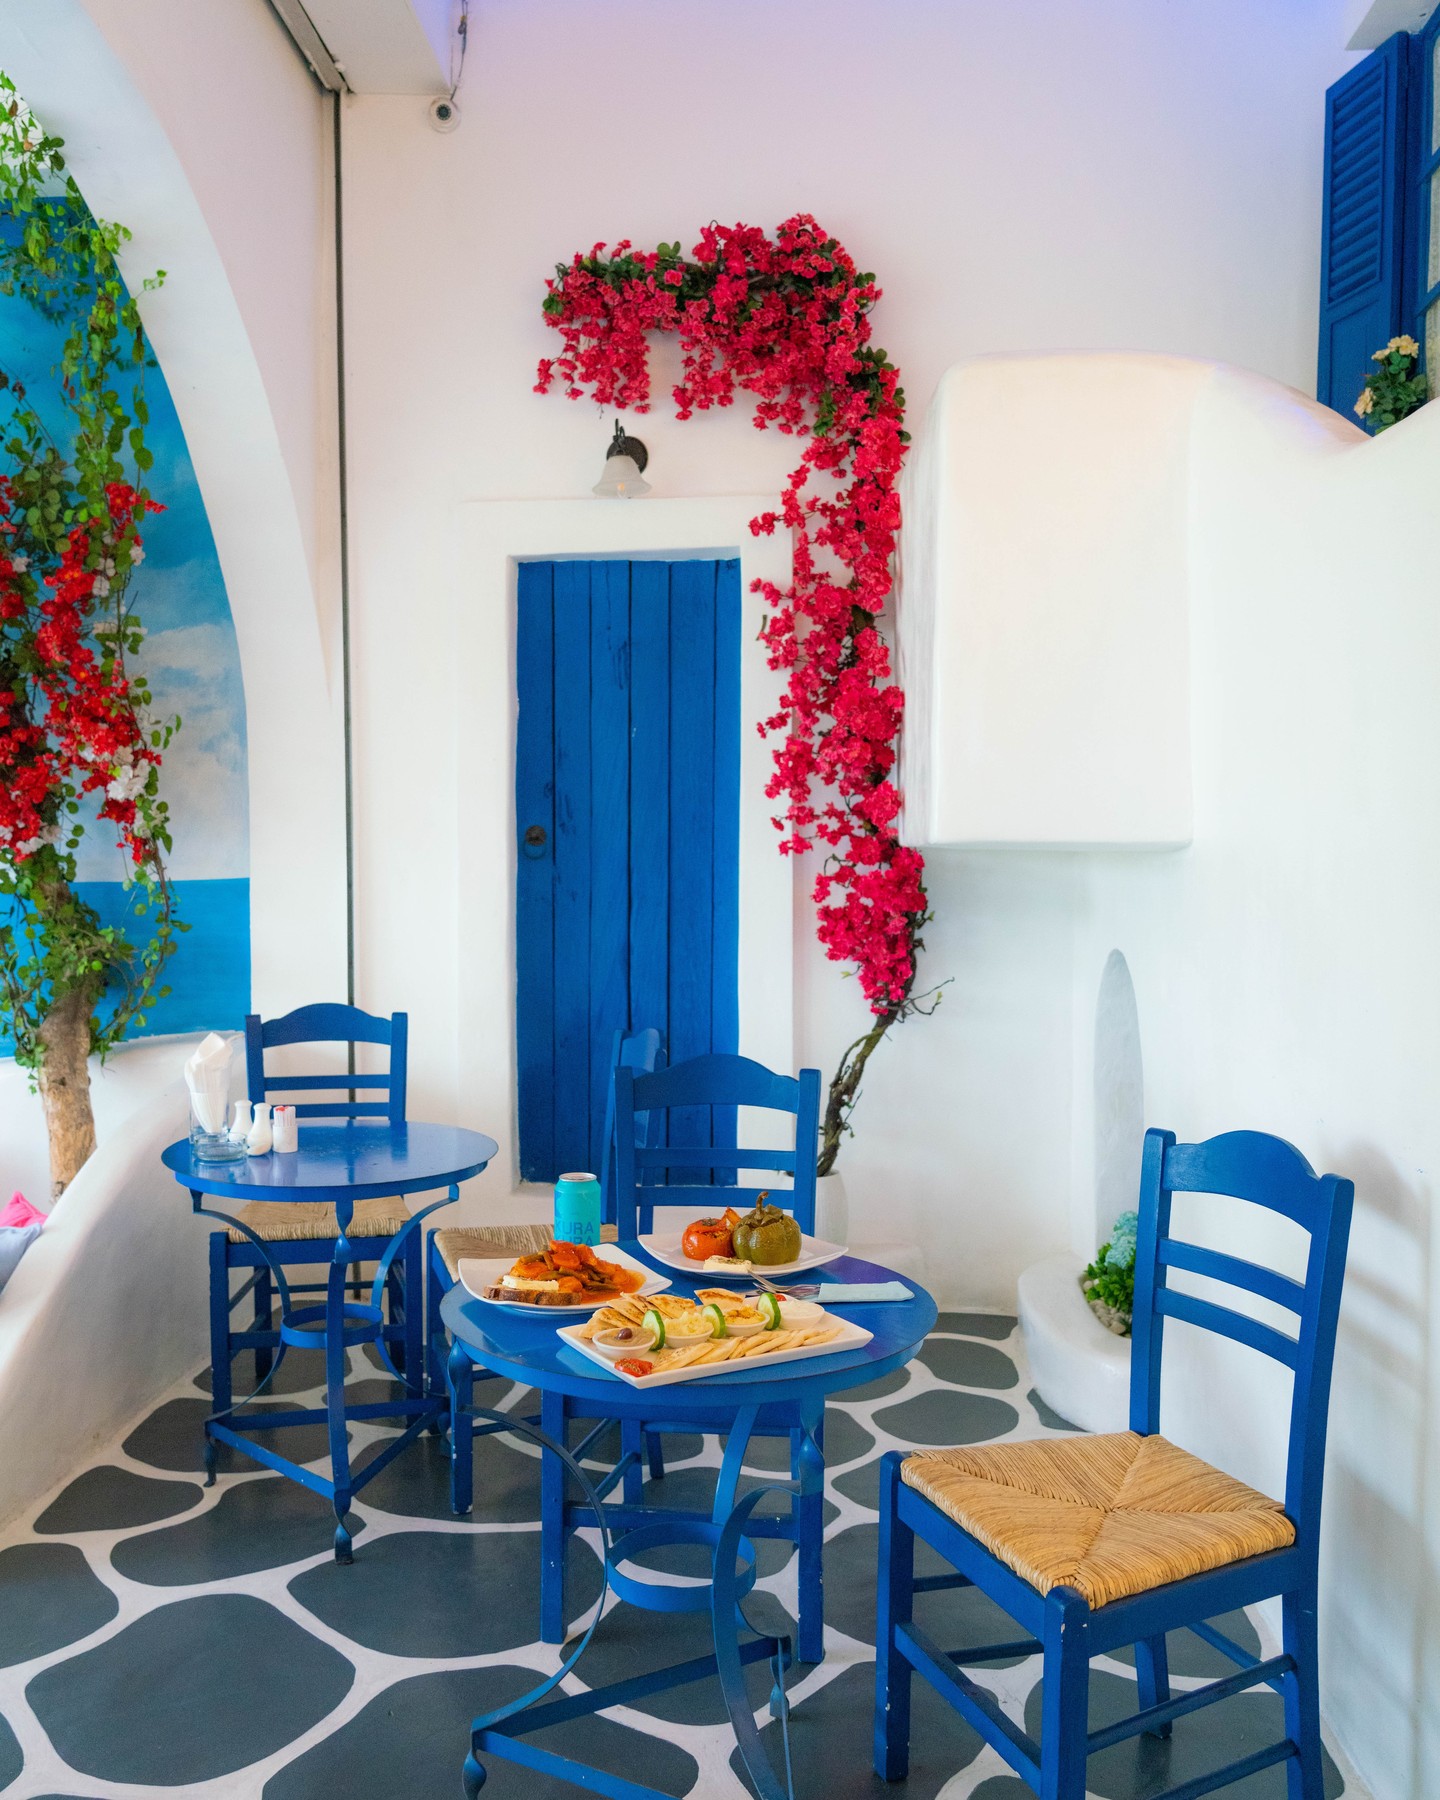 Santorini dupes near Singapore - Places that look like Santorini in Southeast Asia - Greek Restaurant Bali